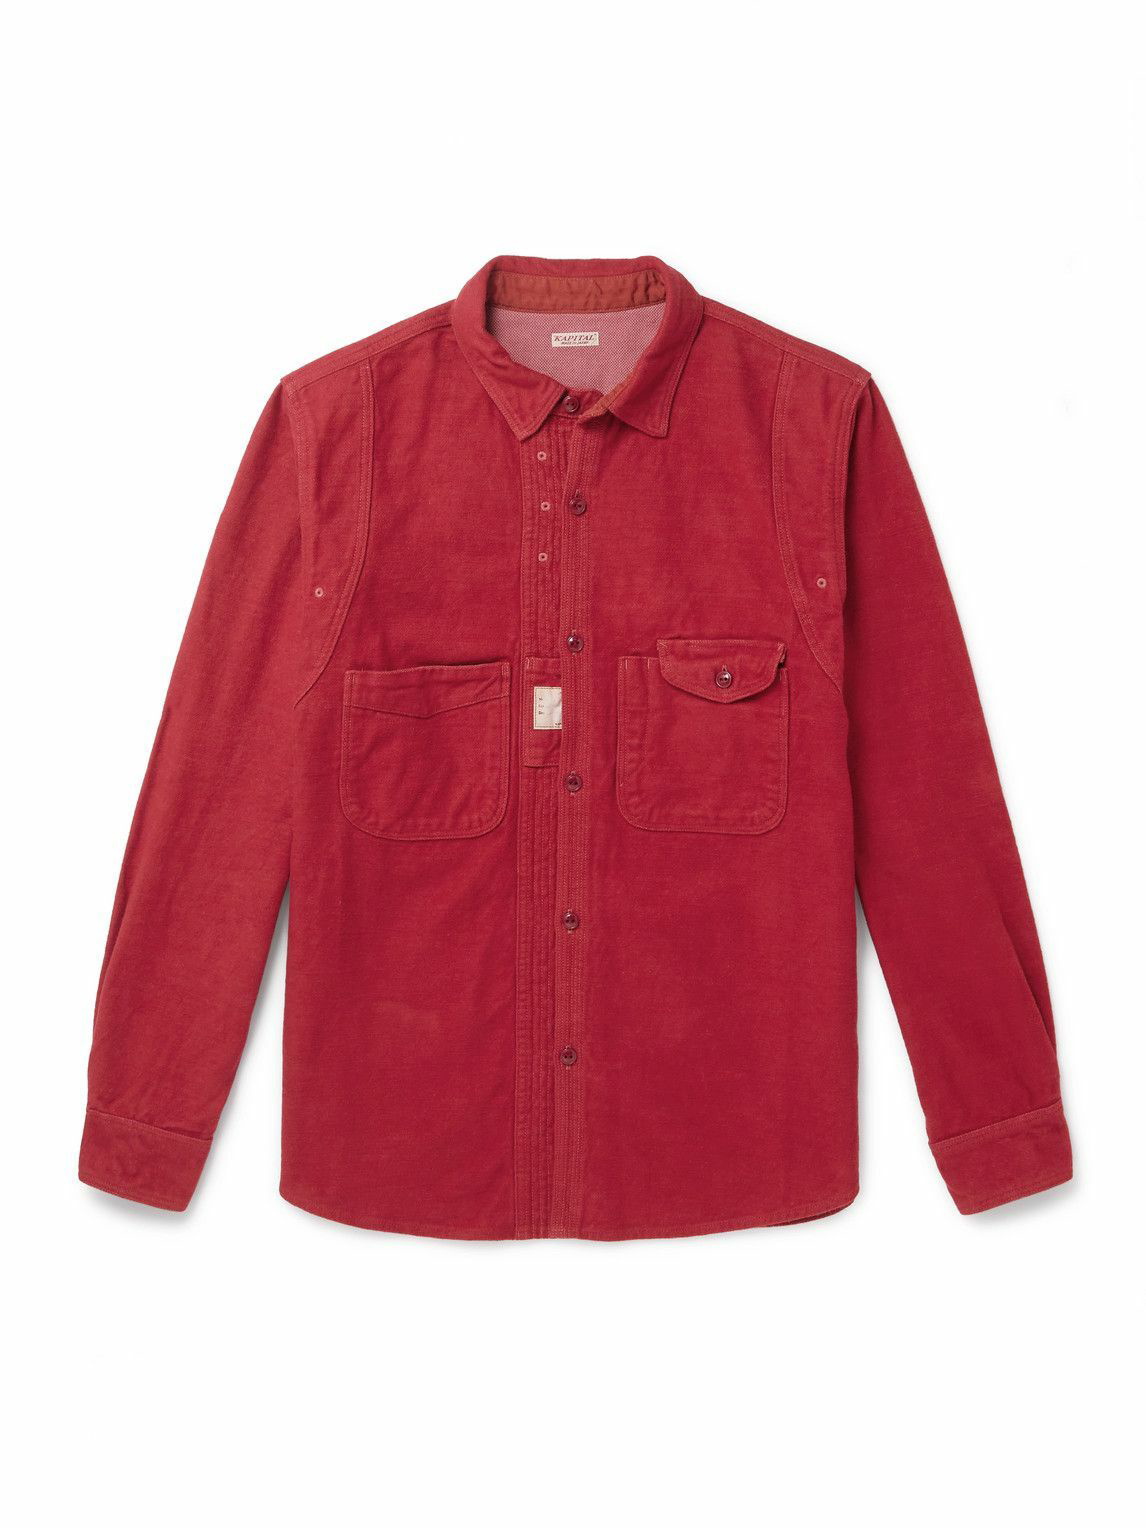 KAPITAL - CPO Brushed Cotton-Fleece Shirt - Red KAPITAL